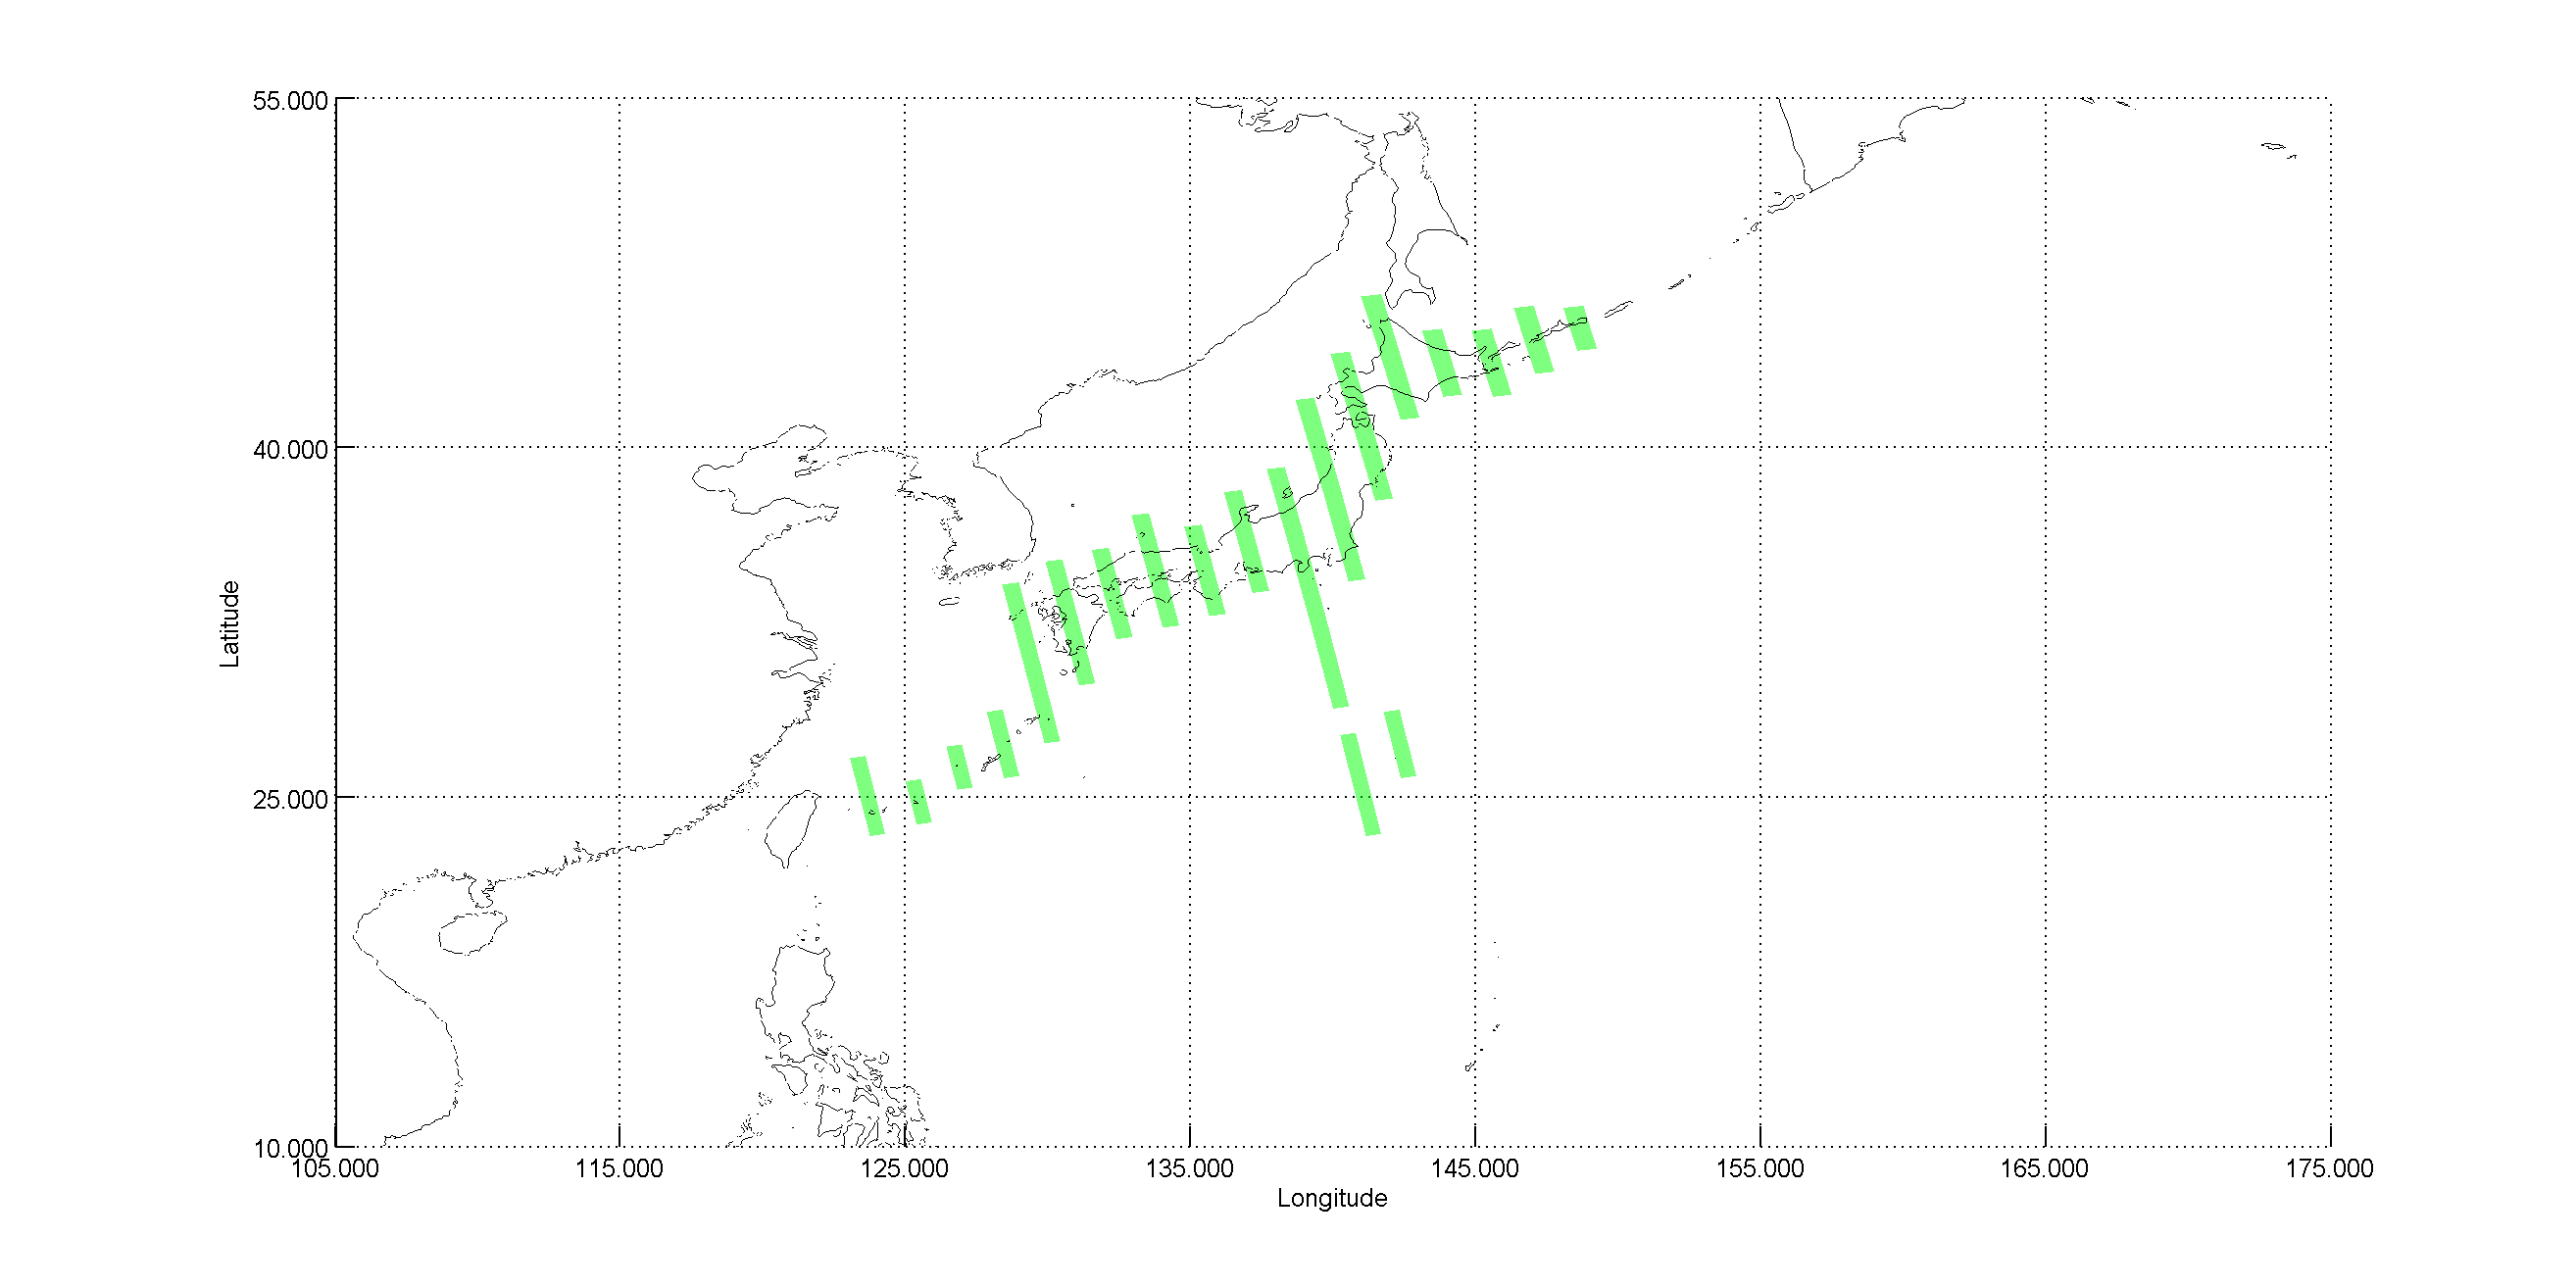 CYCLE_138 - Japan Ascending passes